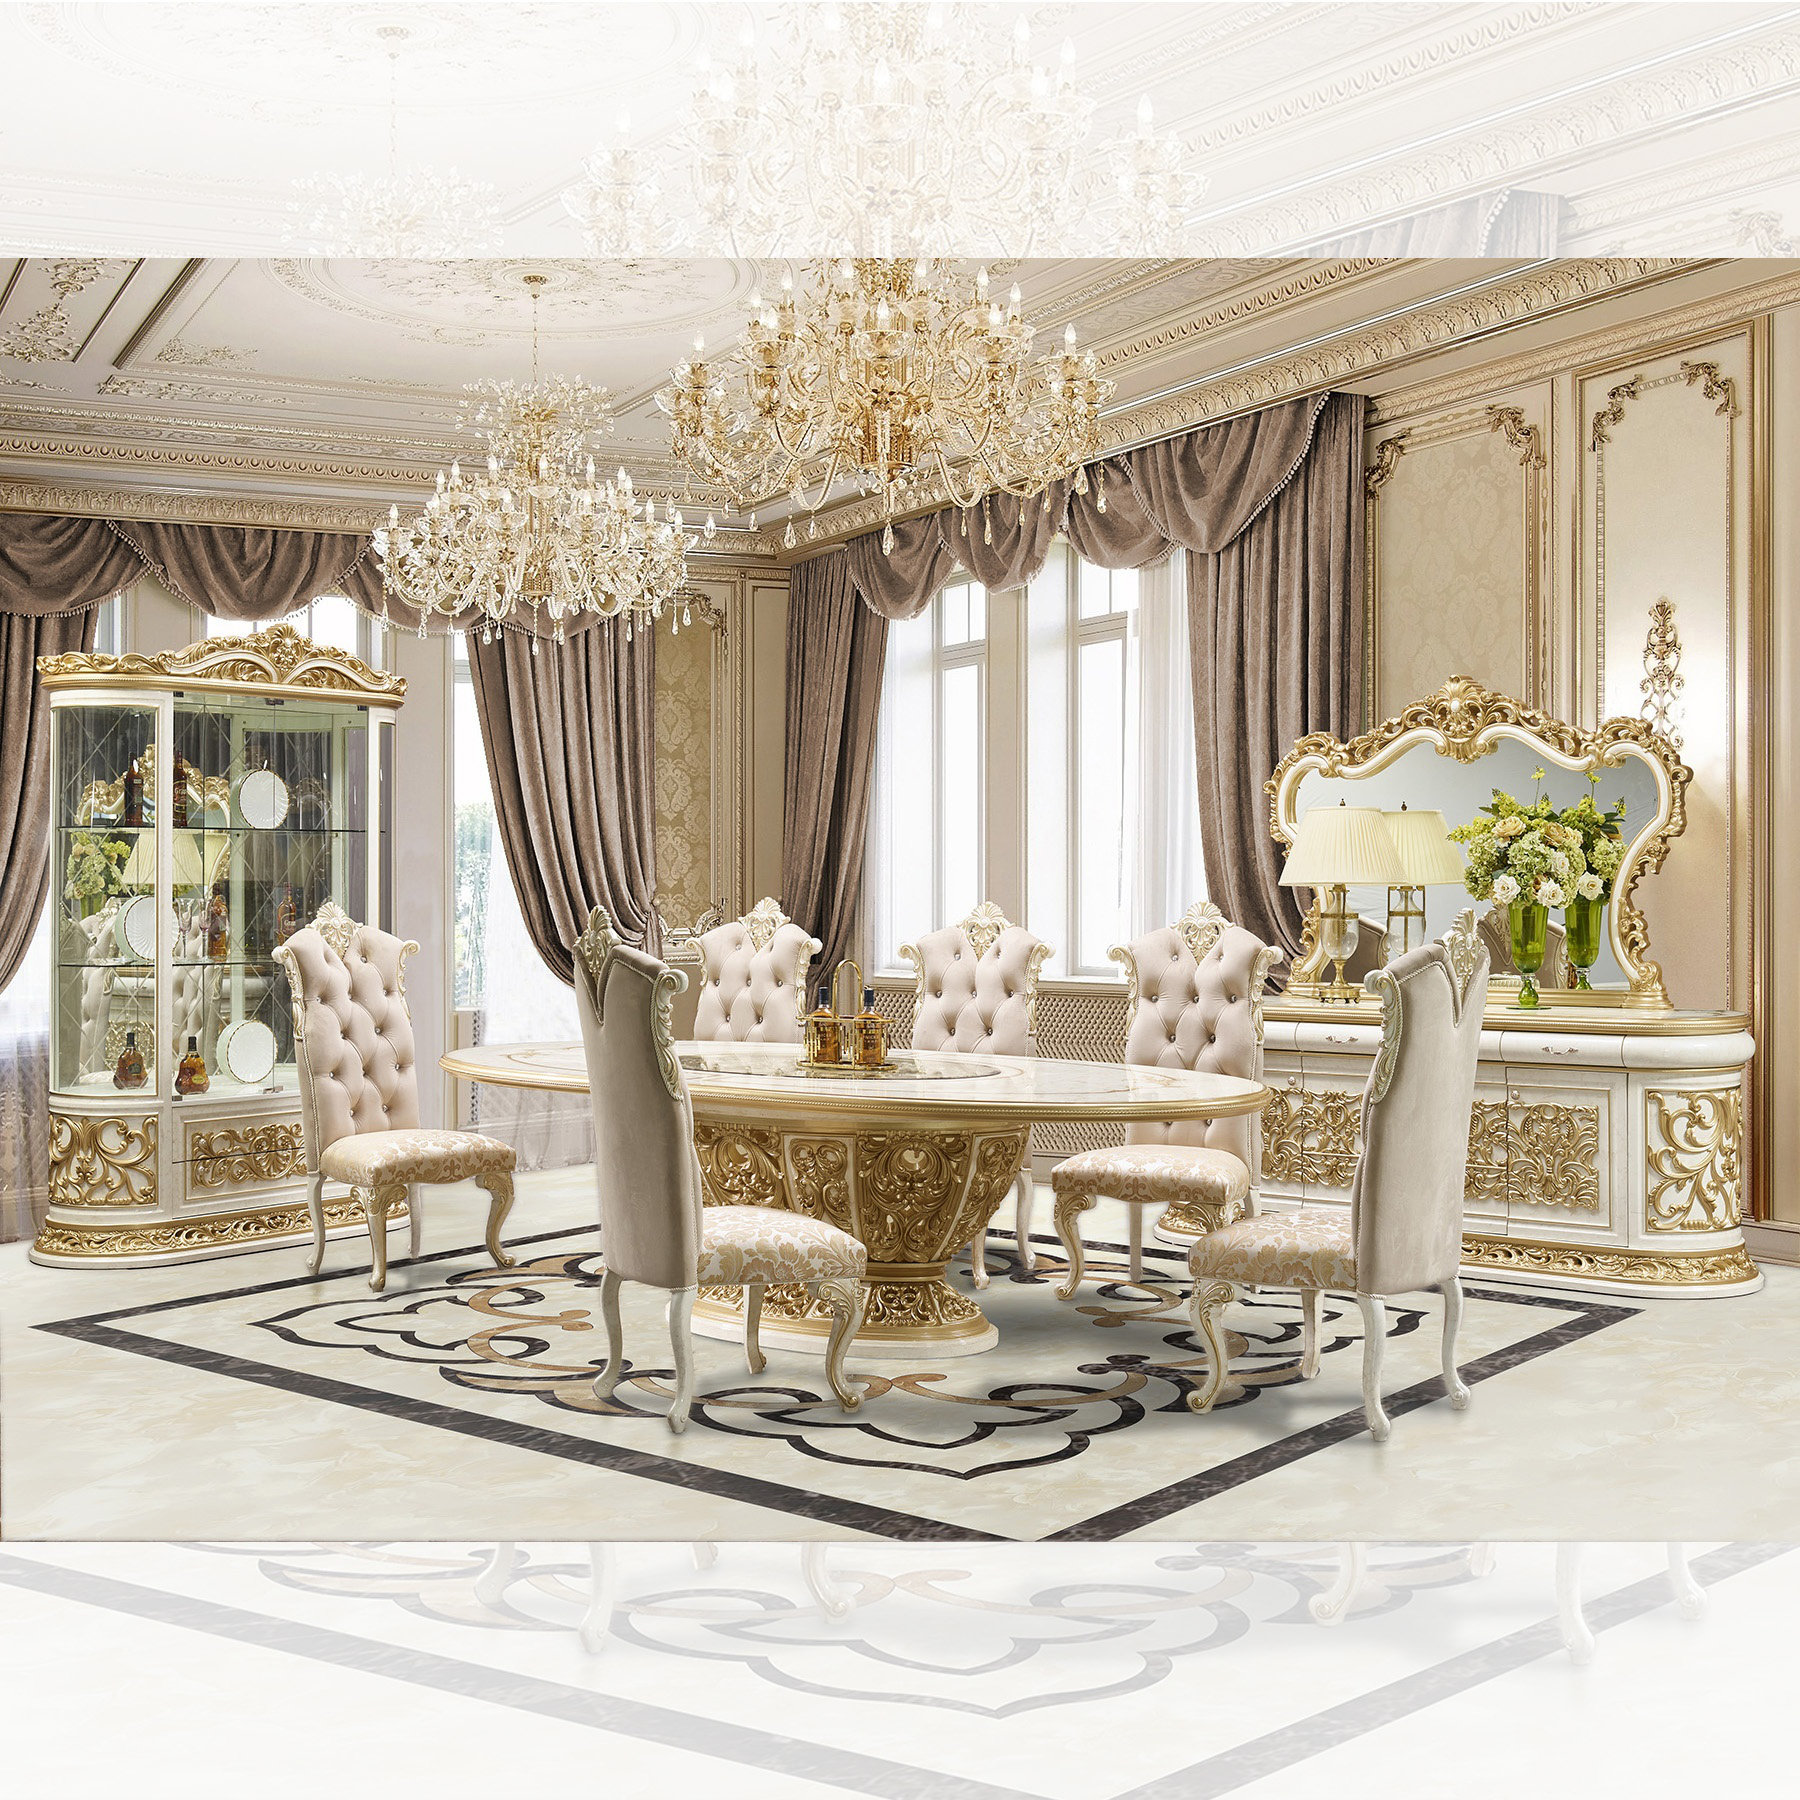 7pc Kitchen Utensil Set in Glossy Golden Color - Online Furniture